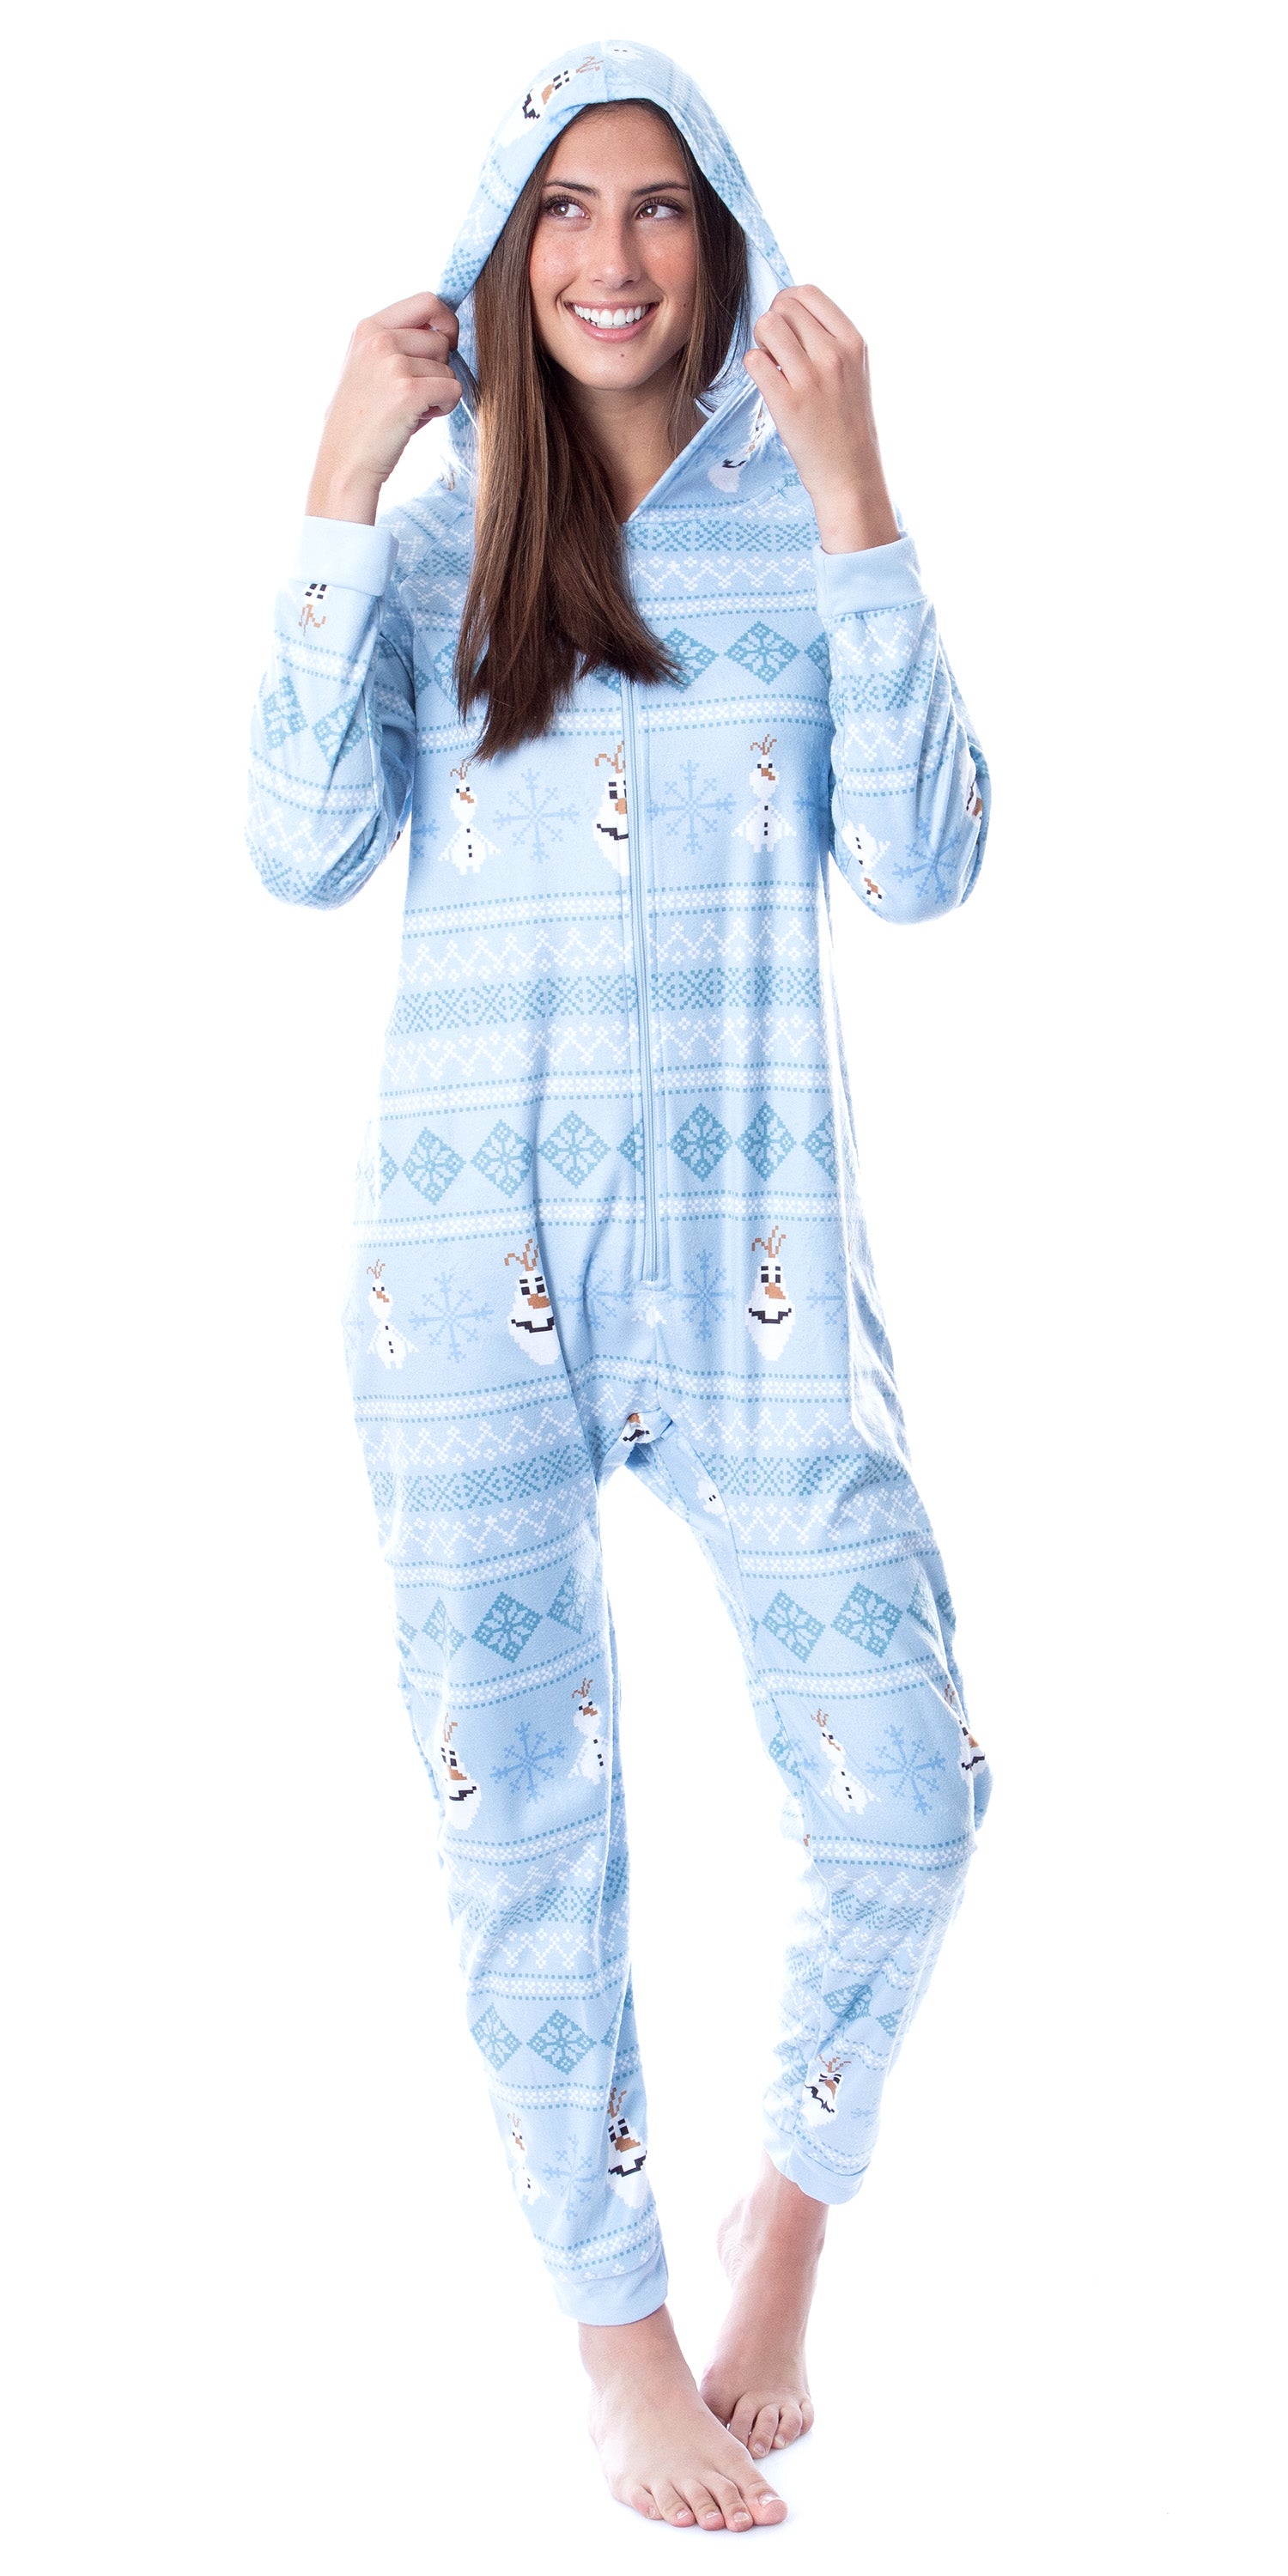 Disney Womens' Frozen Olaf Sweater Style Loungewear Pajama Pants Blue :  Target